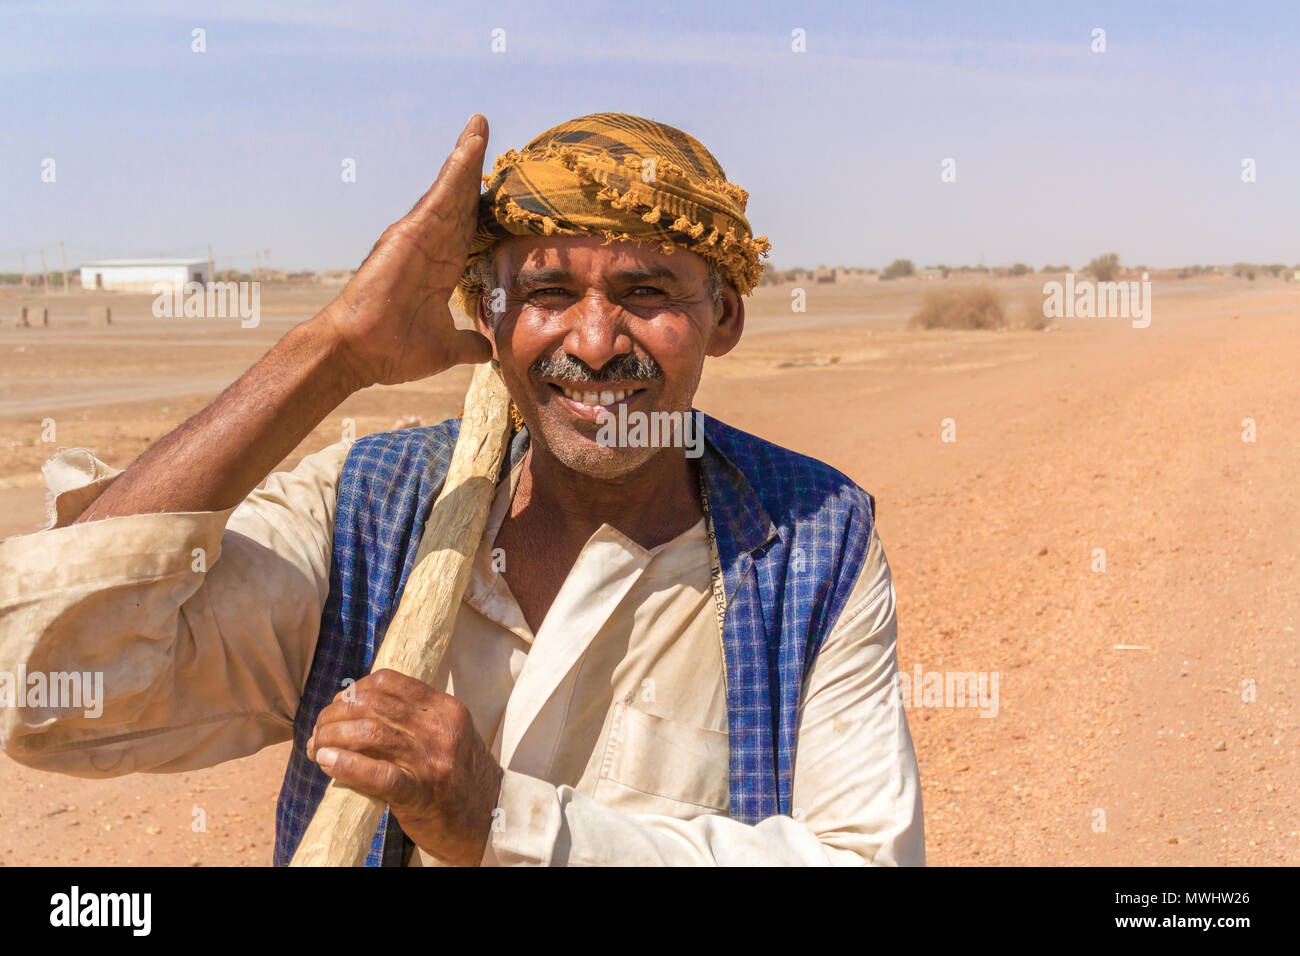 Sahara, Sudan - January 31, 2015: Portrait of the smiling Bedouin in Sahara desert near Khartoum Stock Photo